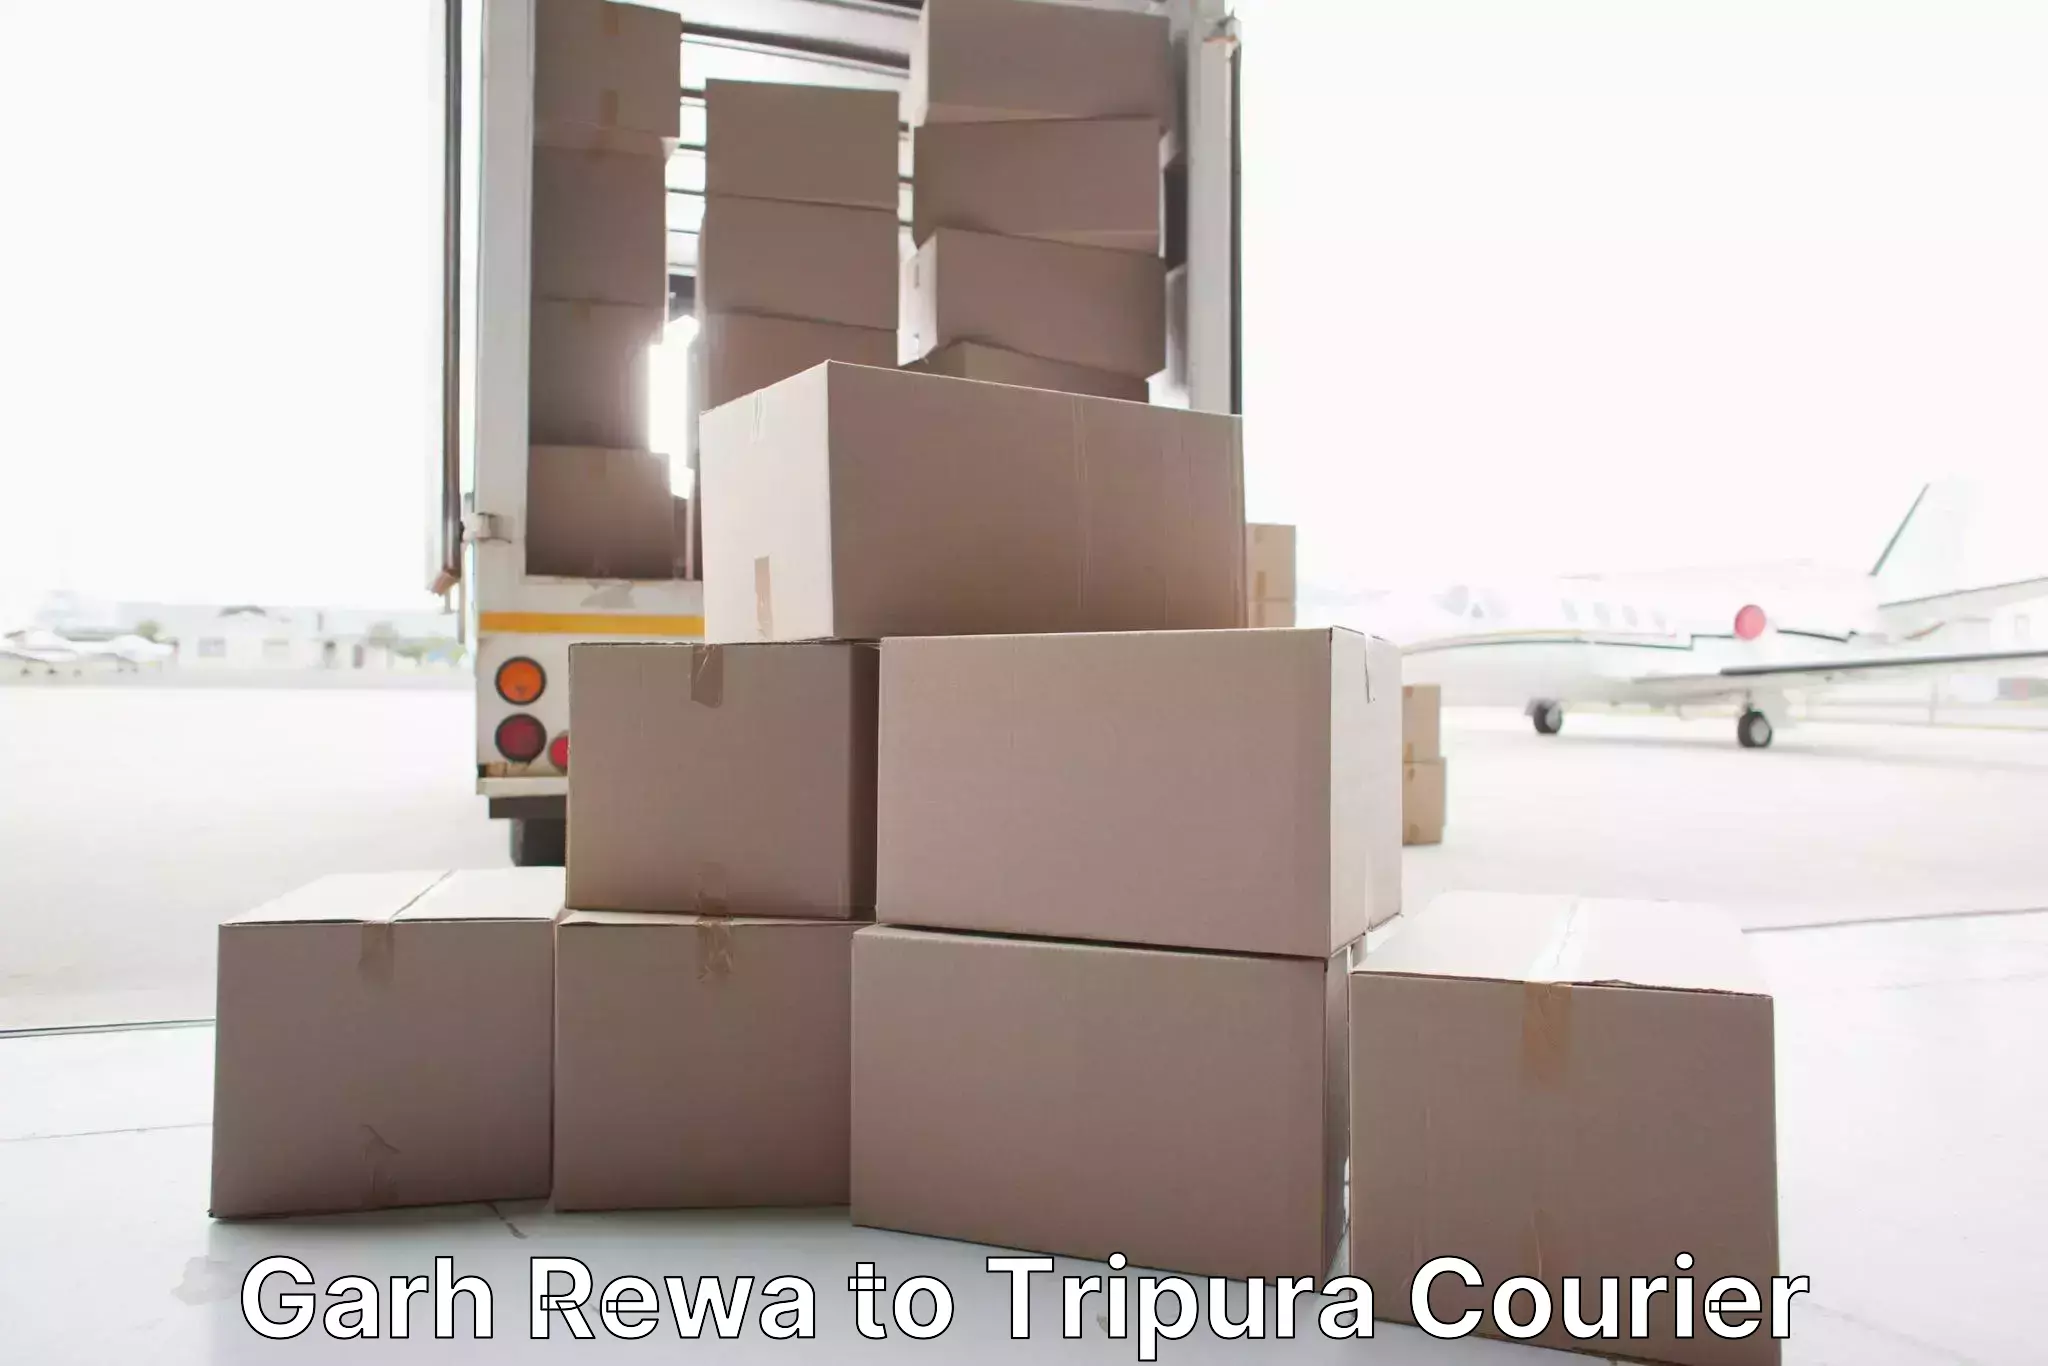 Budget-friendly movers Garh Rewa to Tripura